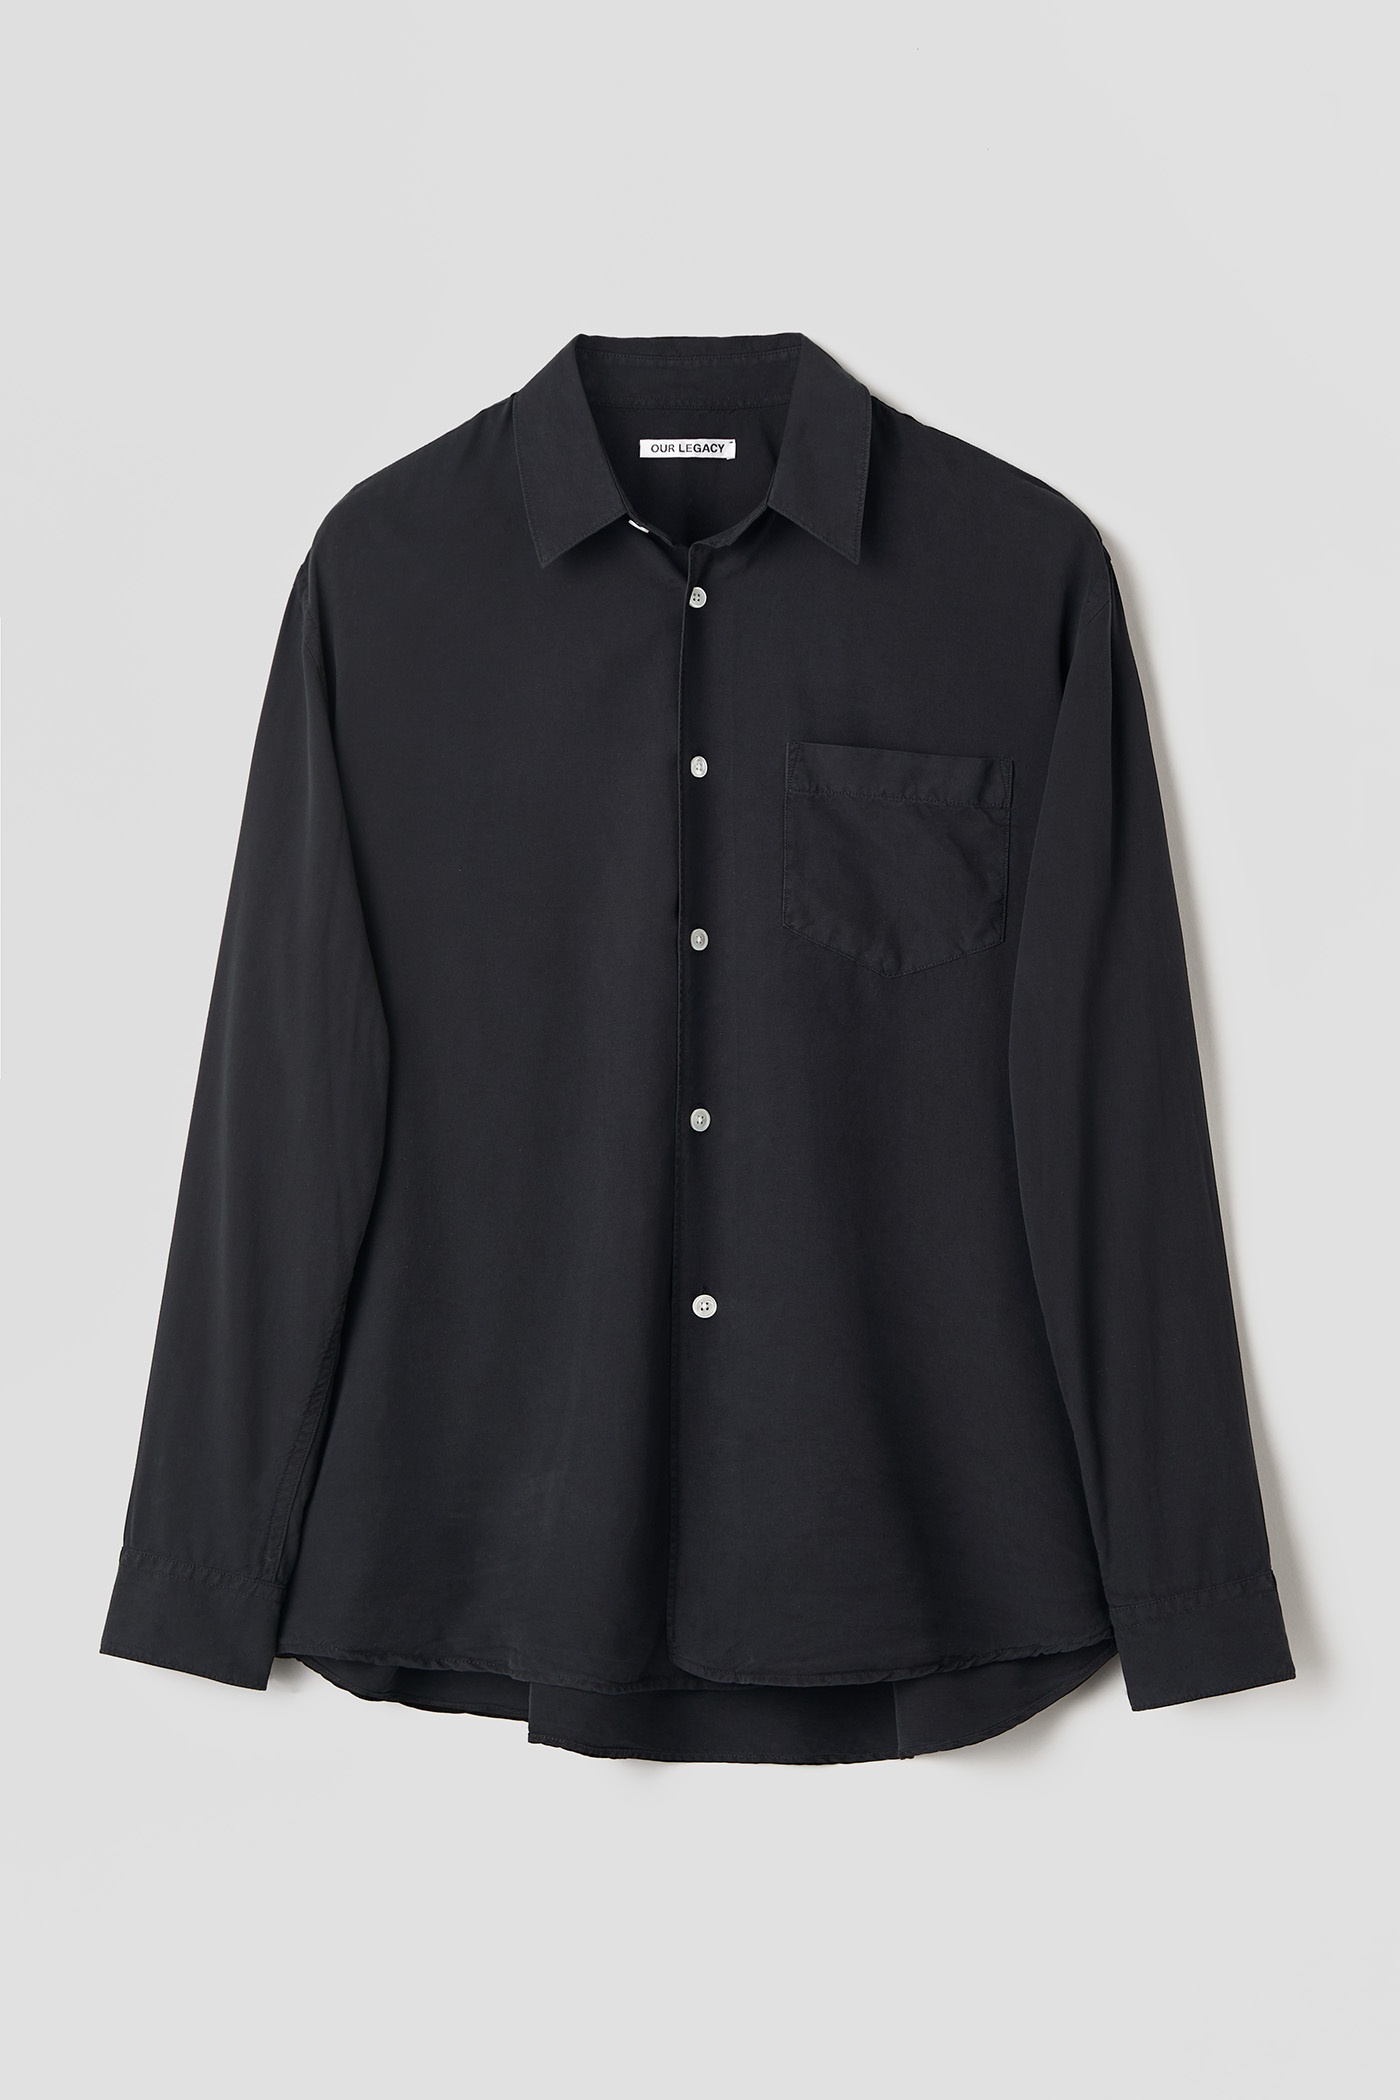 Initial Shirt Black Fine Silk - 1